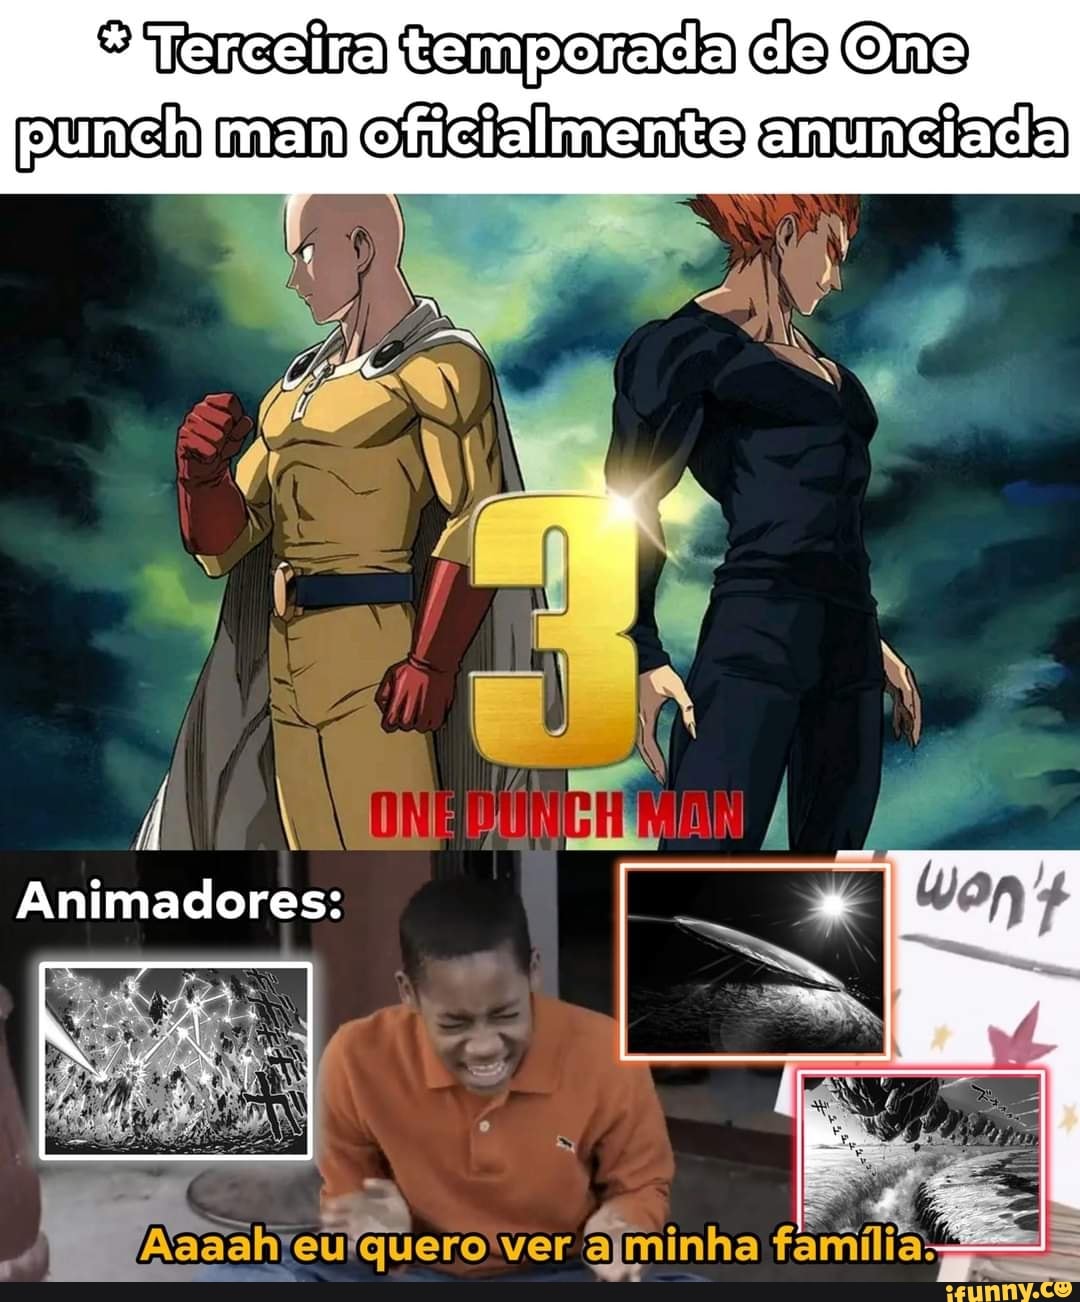 Anunciada a segunda temporada do anime de 'One-Punch Man